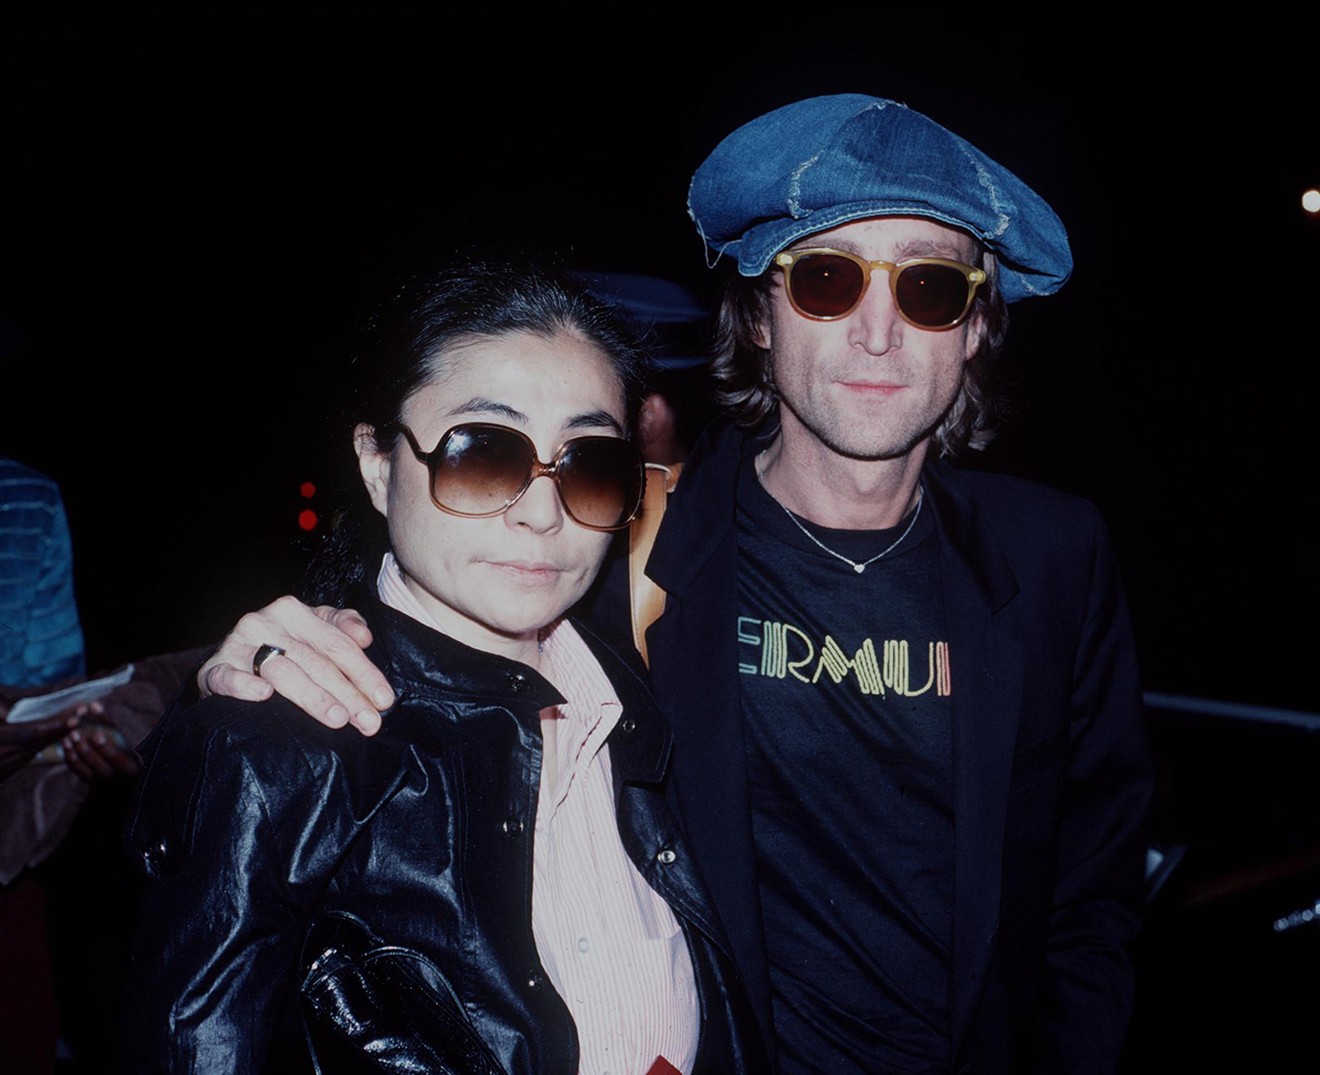 John Lennon and Yoko Ono in 1980.